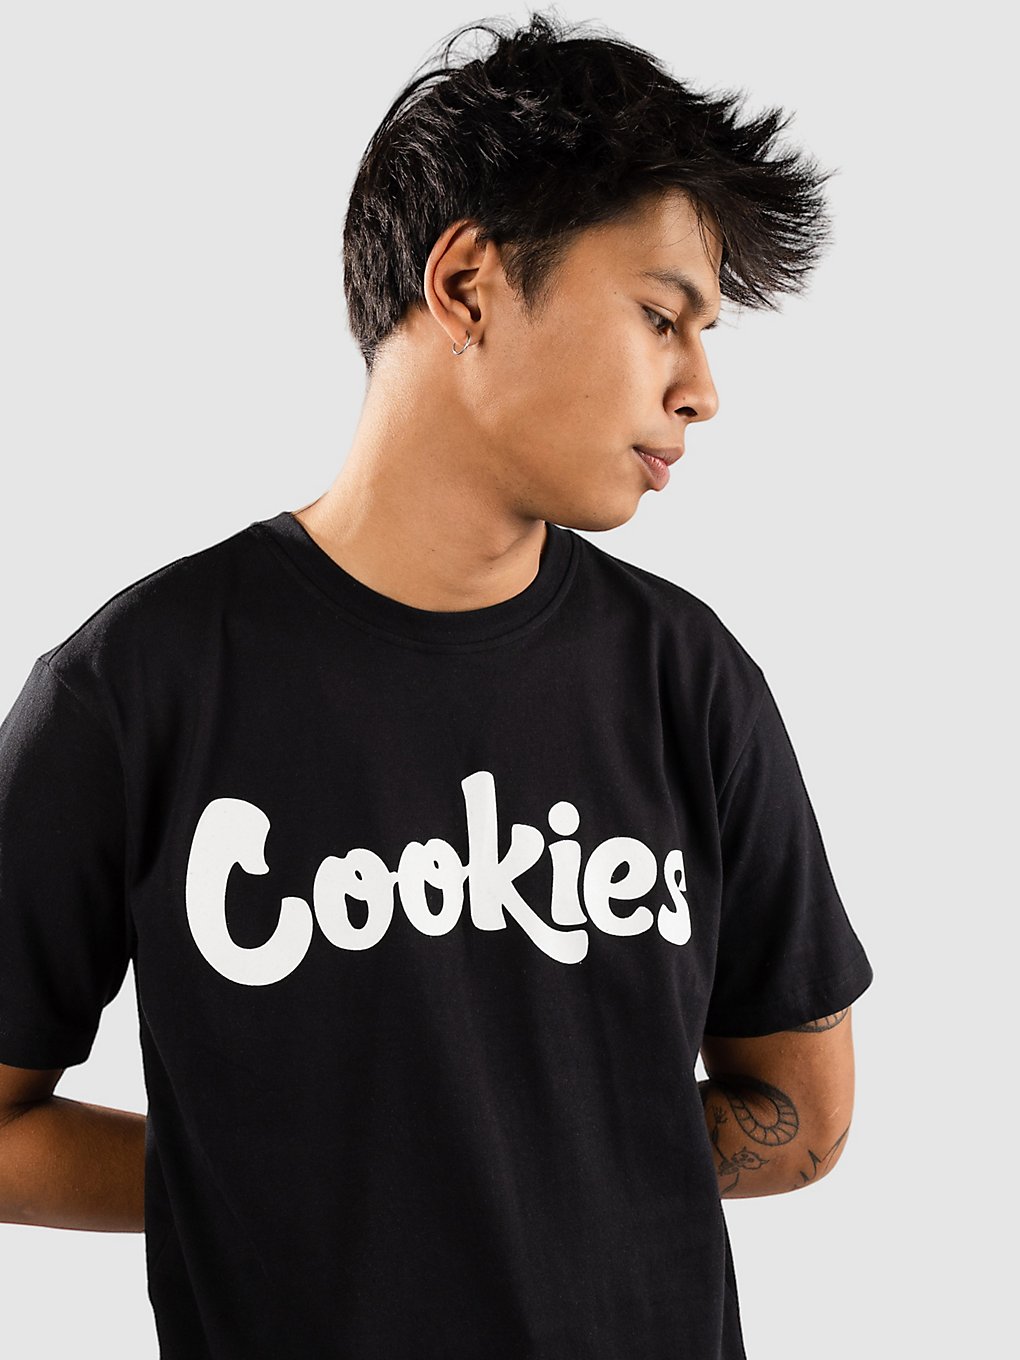 Cookies Original Mint T-Shirt white kaufen